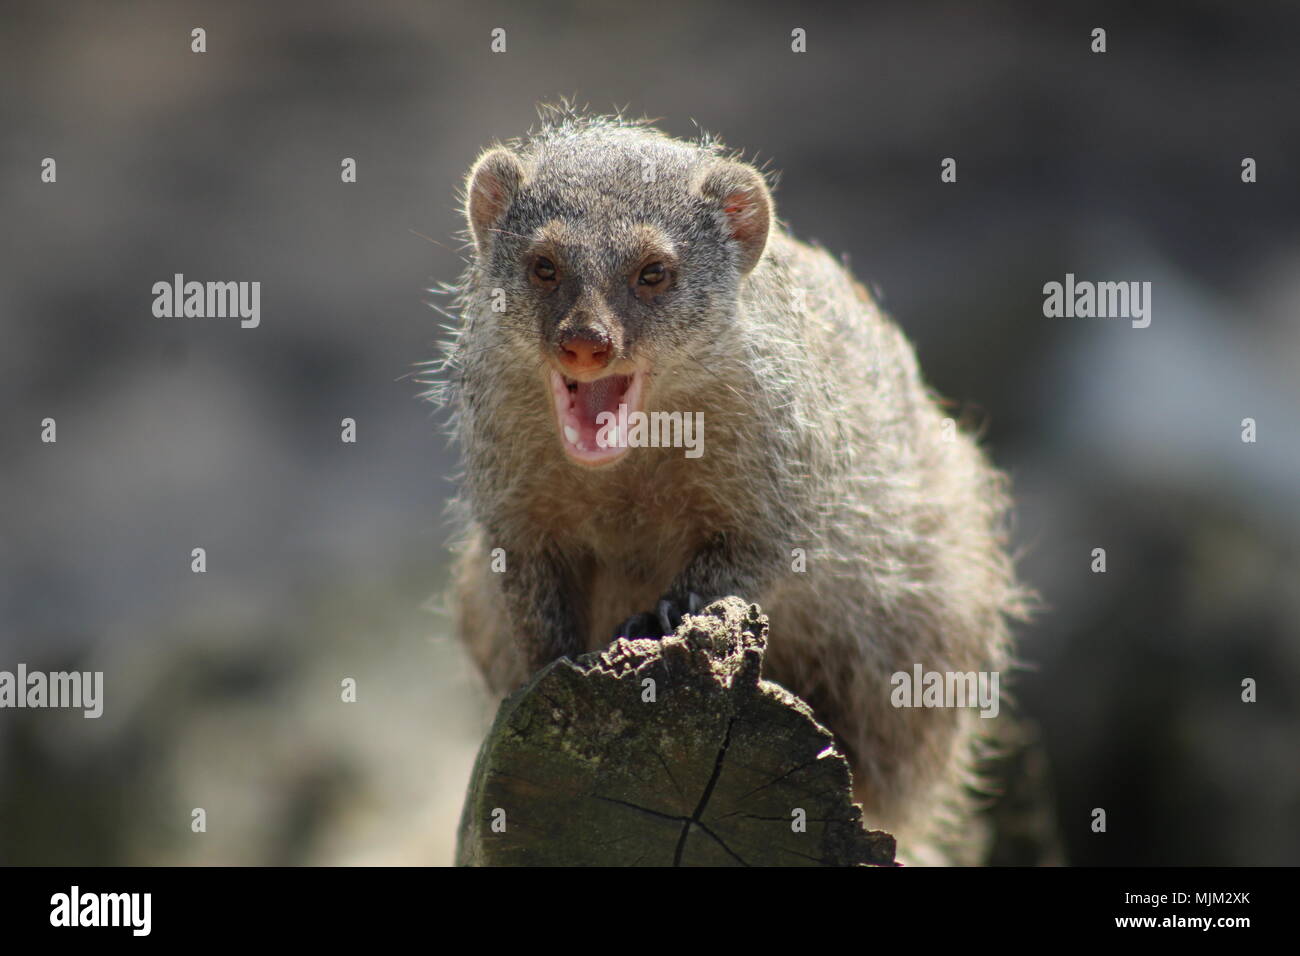 Mongoose in Its Zoo Habitat Stock Illustration - Illustration of  inquisitive, chipmunk: 285117862